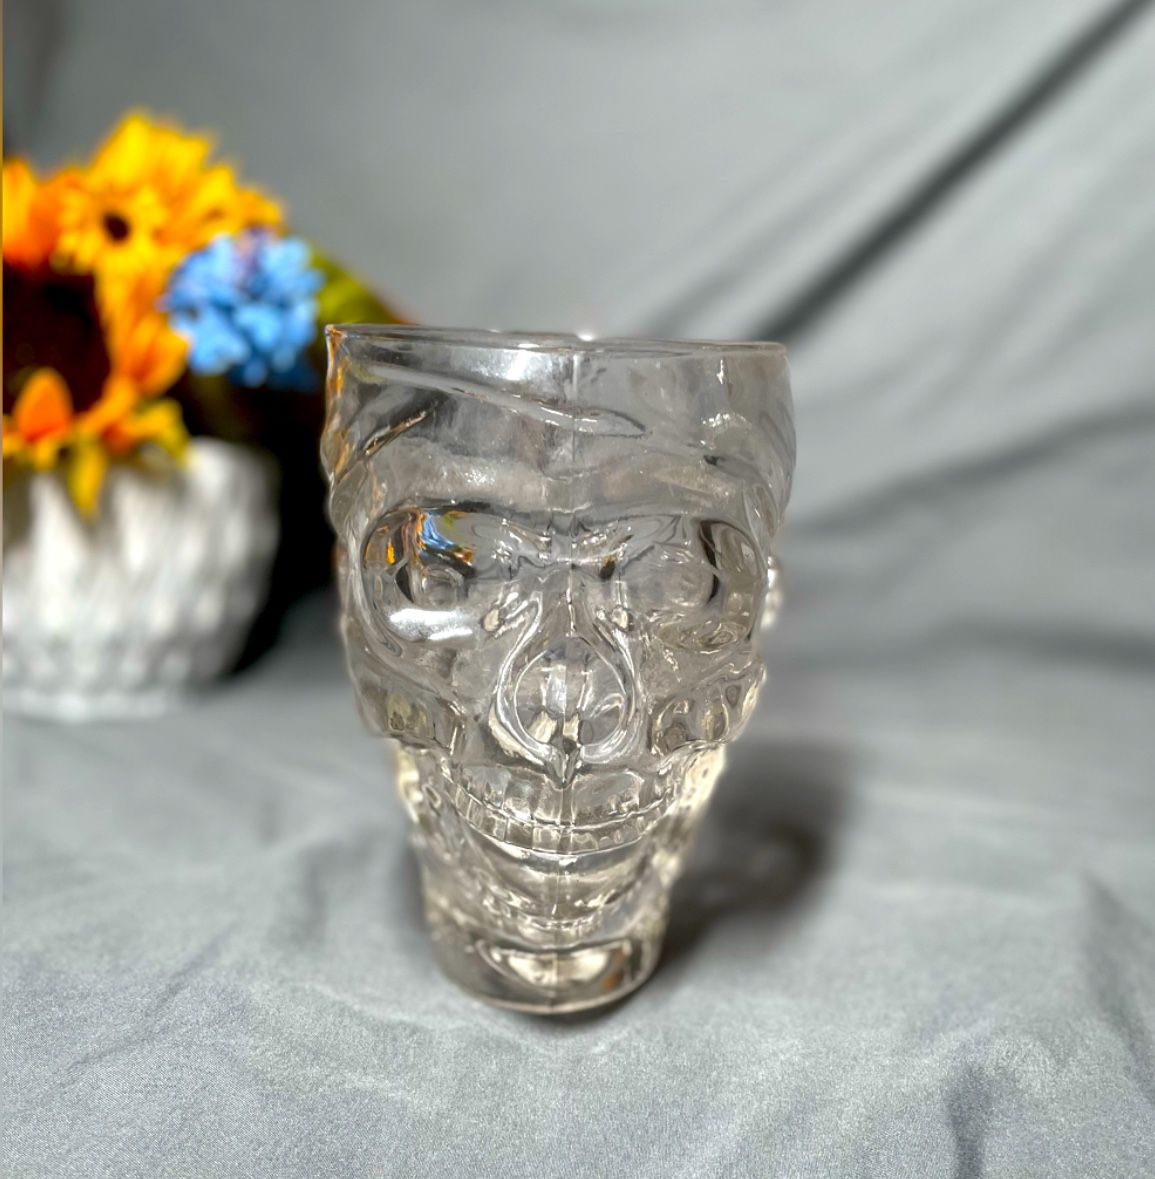 Collectible Pirate Skull Mug Treasure Island Las Vegas NV Vintage Original Luminarc Glass Made in USA EPC